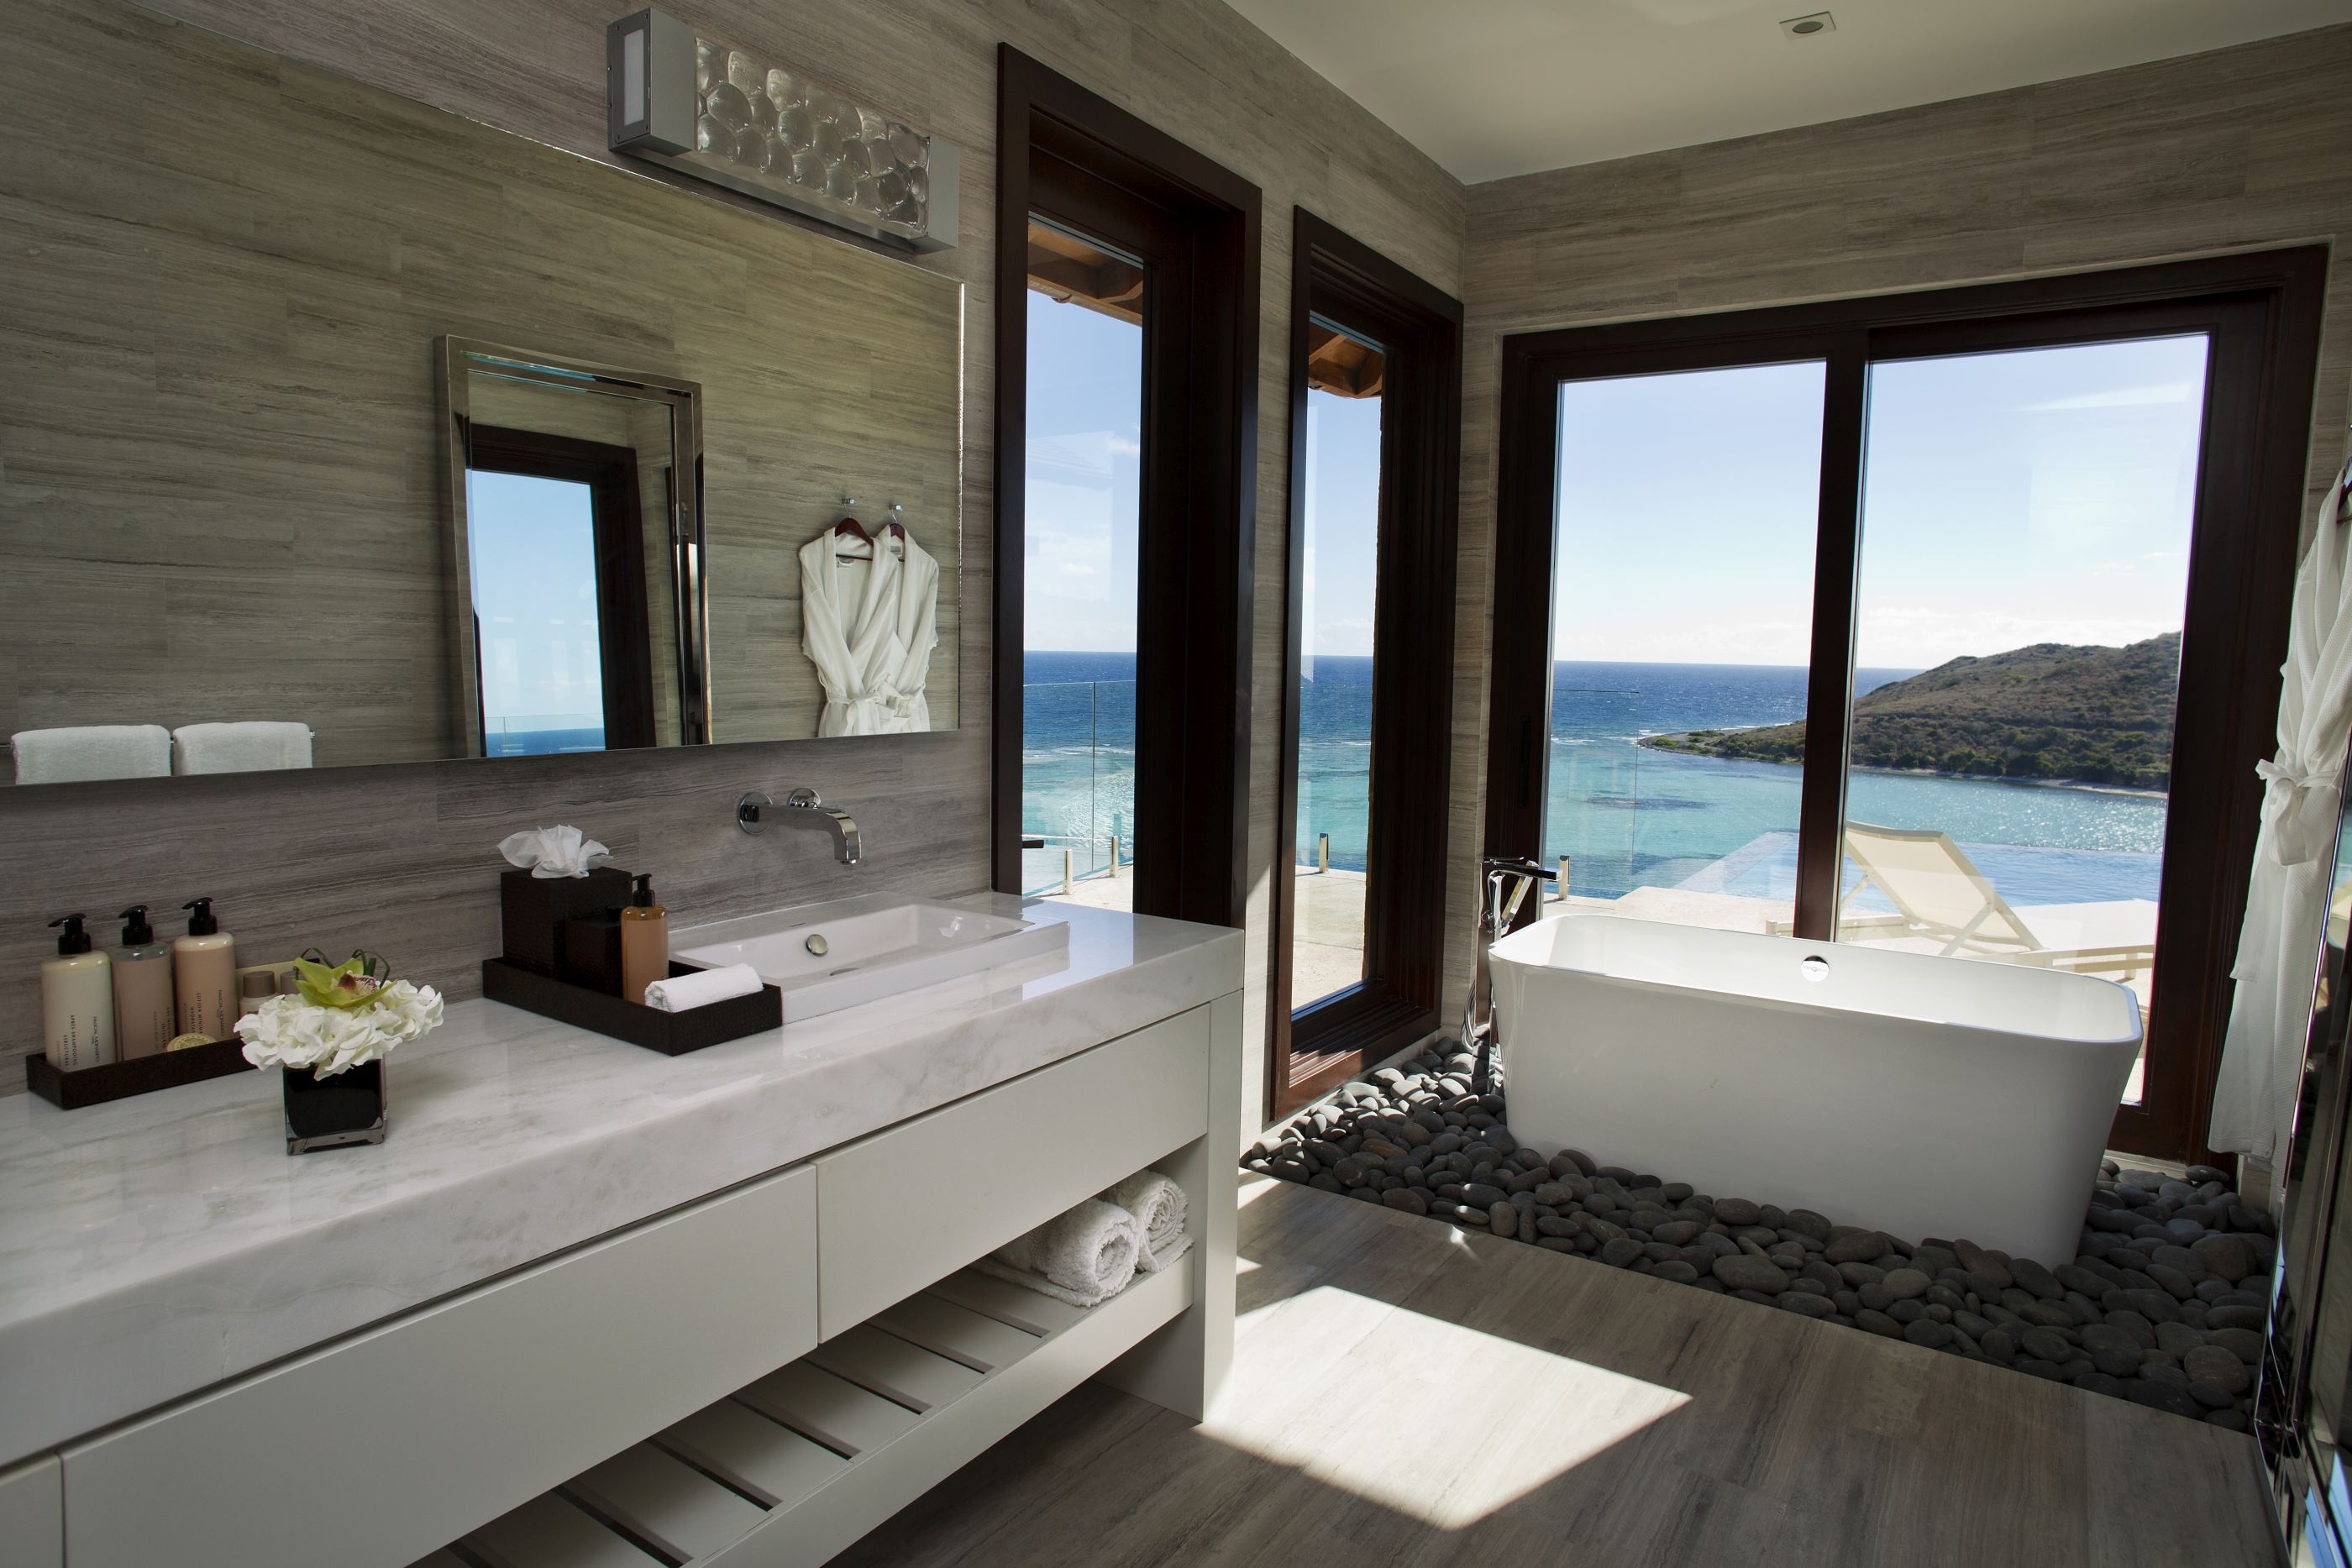 Bathroom and tub of Water's Edge Villa, British Virgin Islands